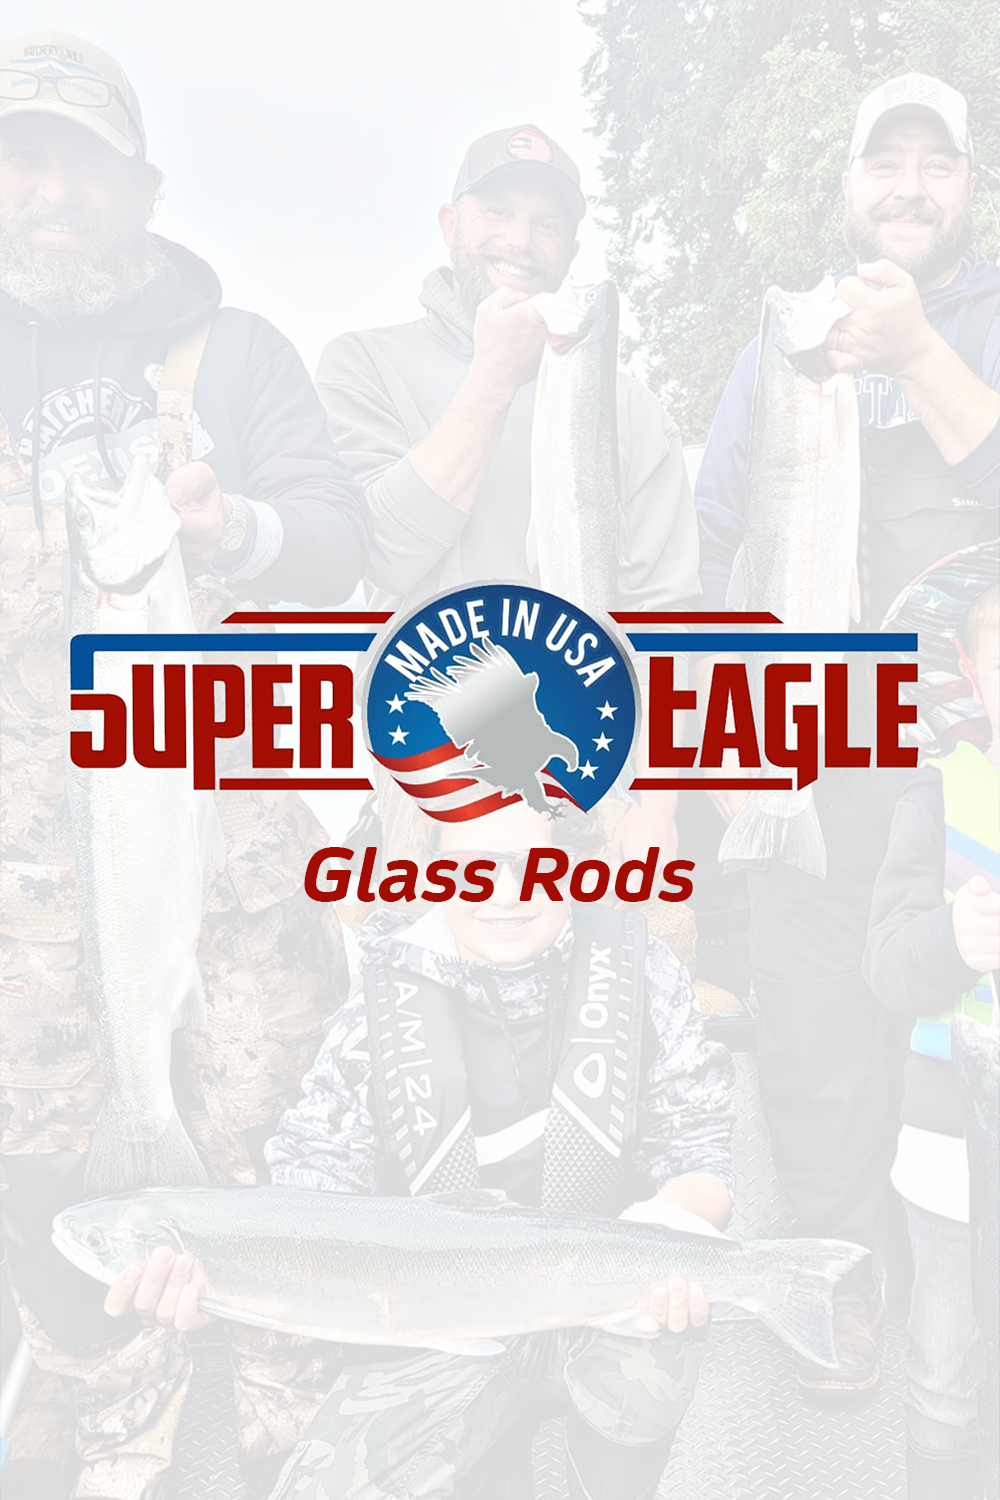 SuperEagle Glass 90-5 DR | 10-40lbs | 9'